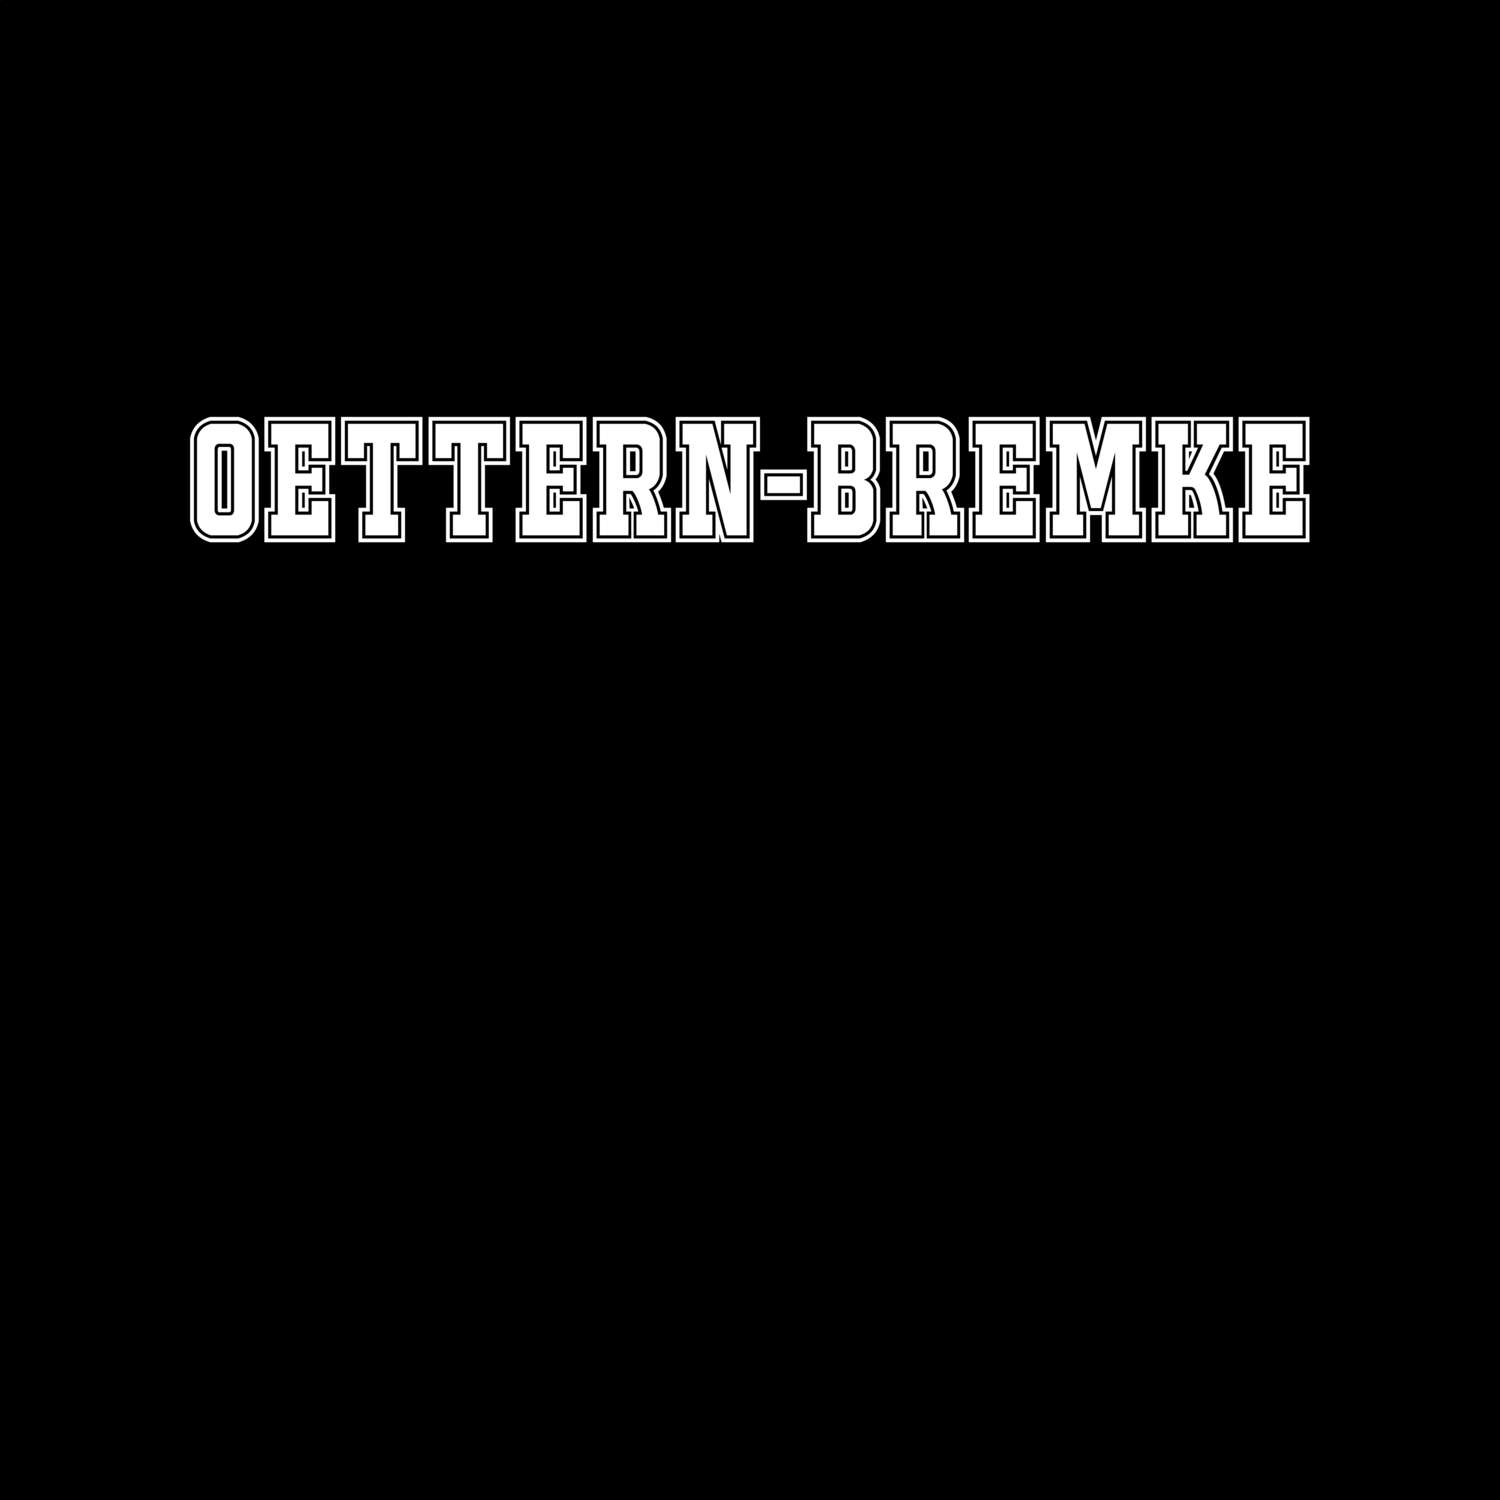 Oettern-Bremke T-Shirt »Classic«